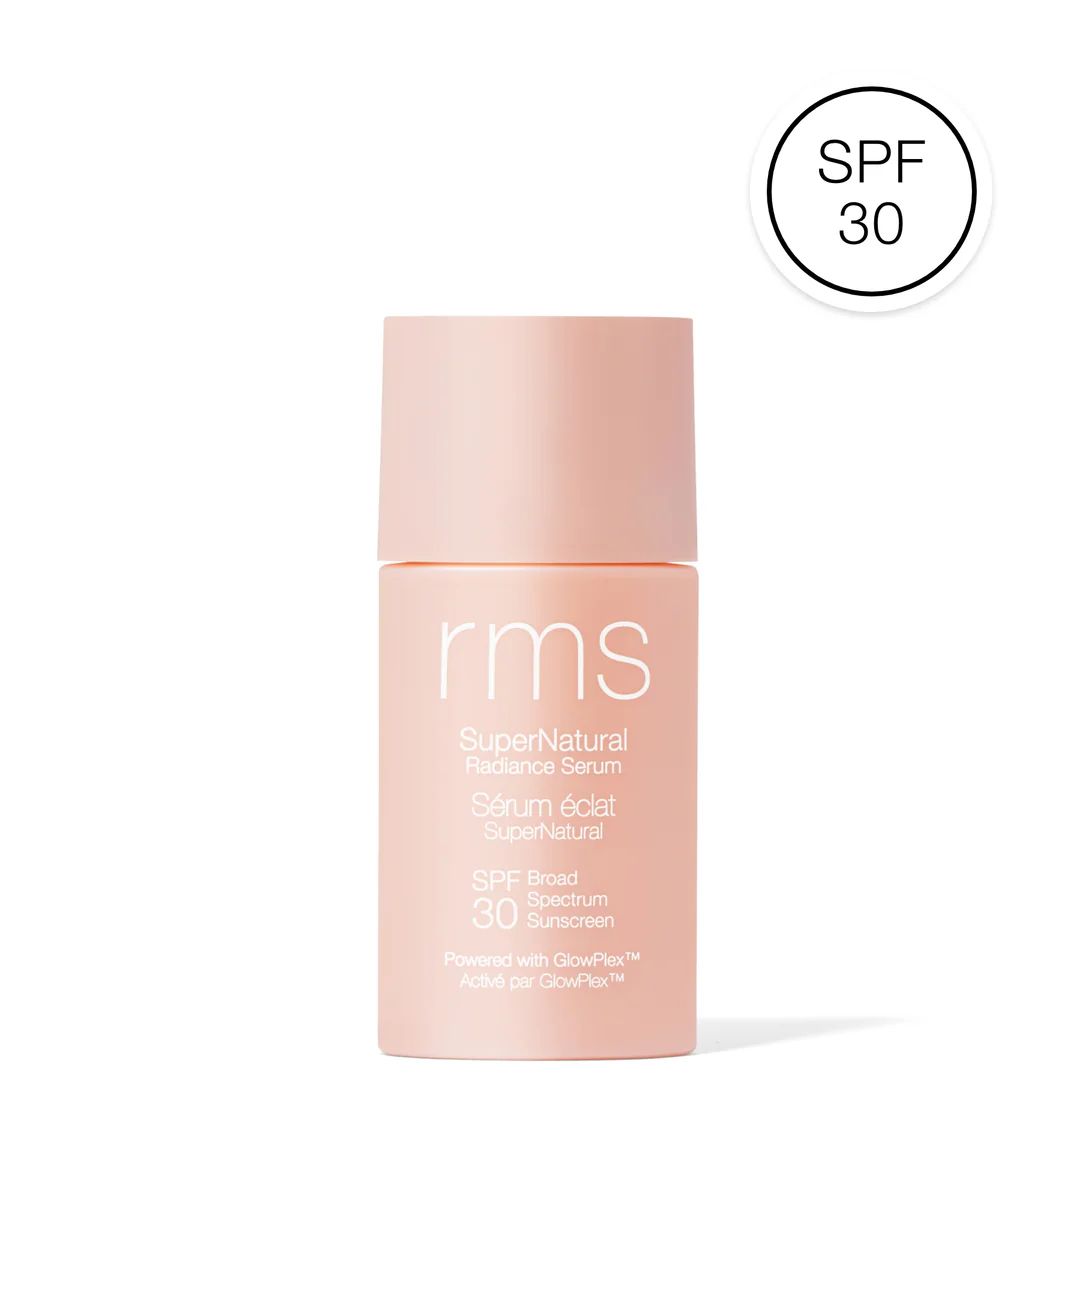 SuperNatural Radiance Serum Broad Spectrum SPF 30 Sunscreen | RMS Beauty